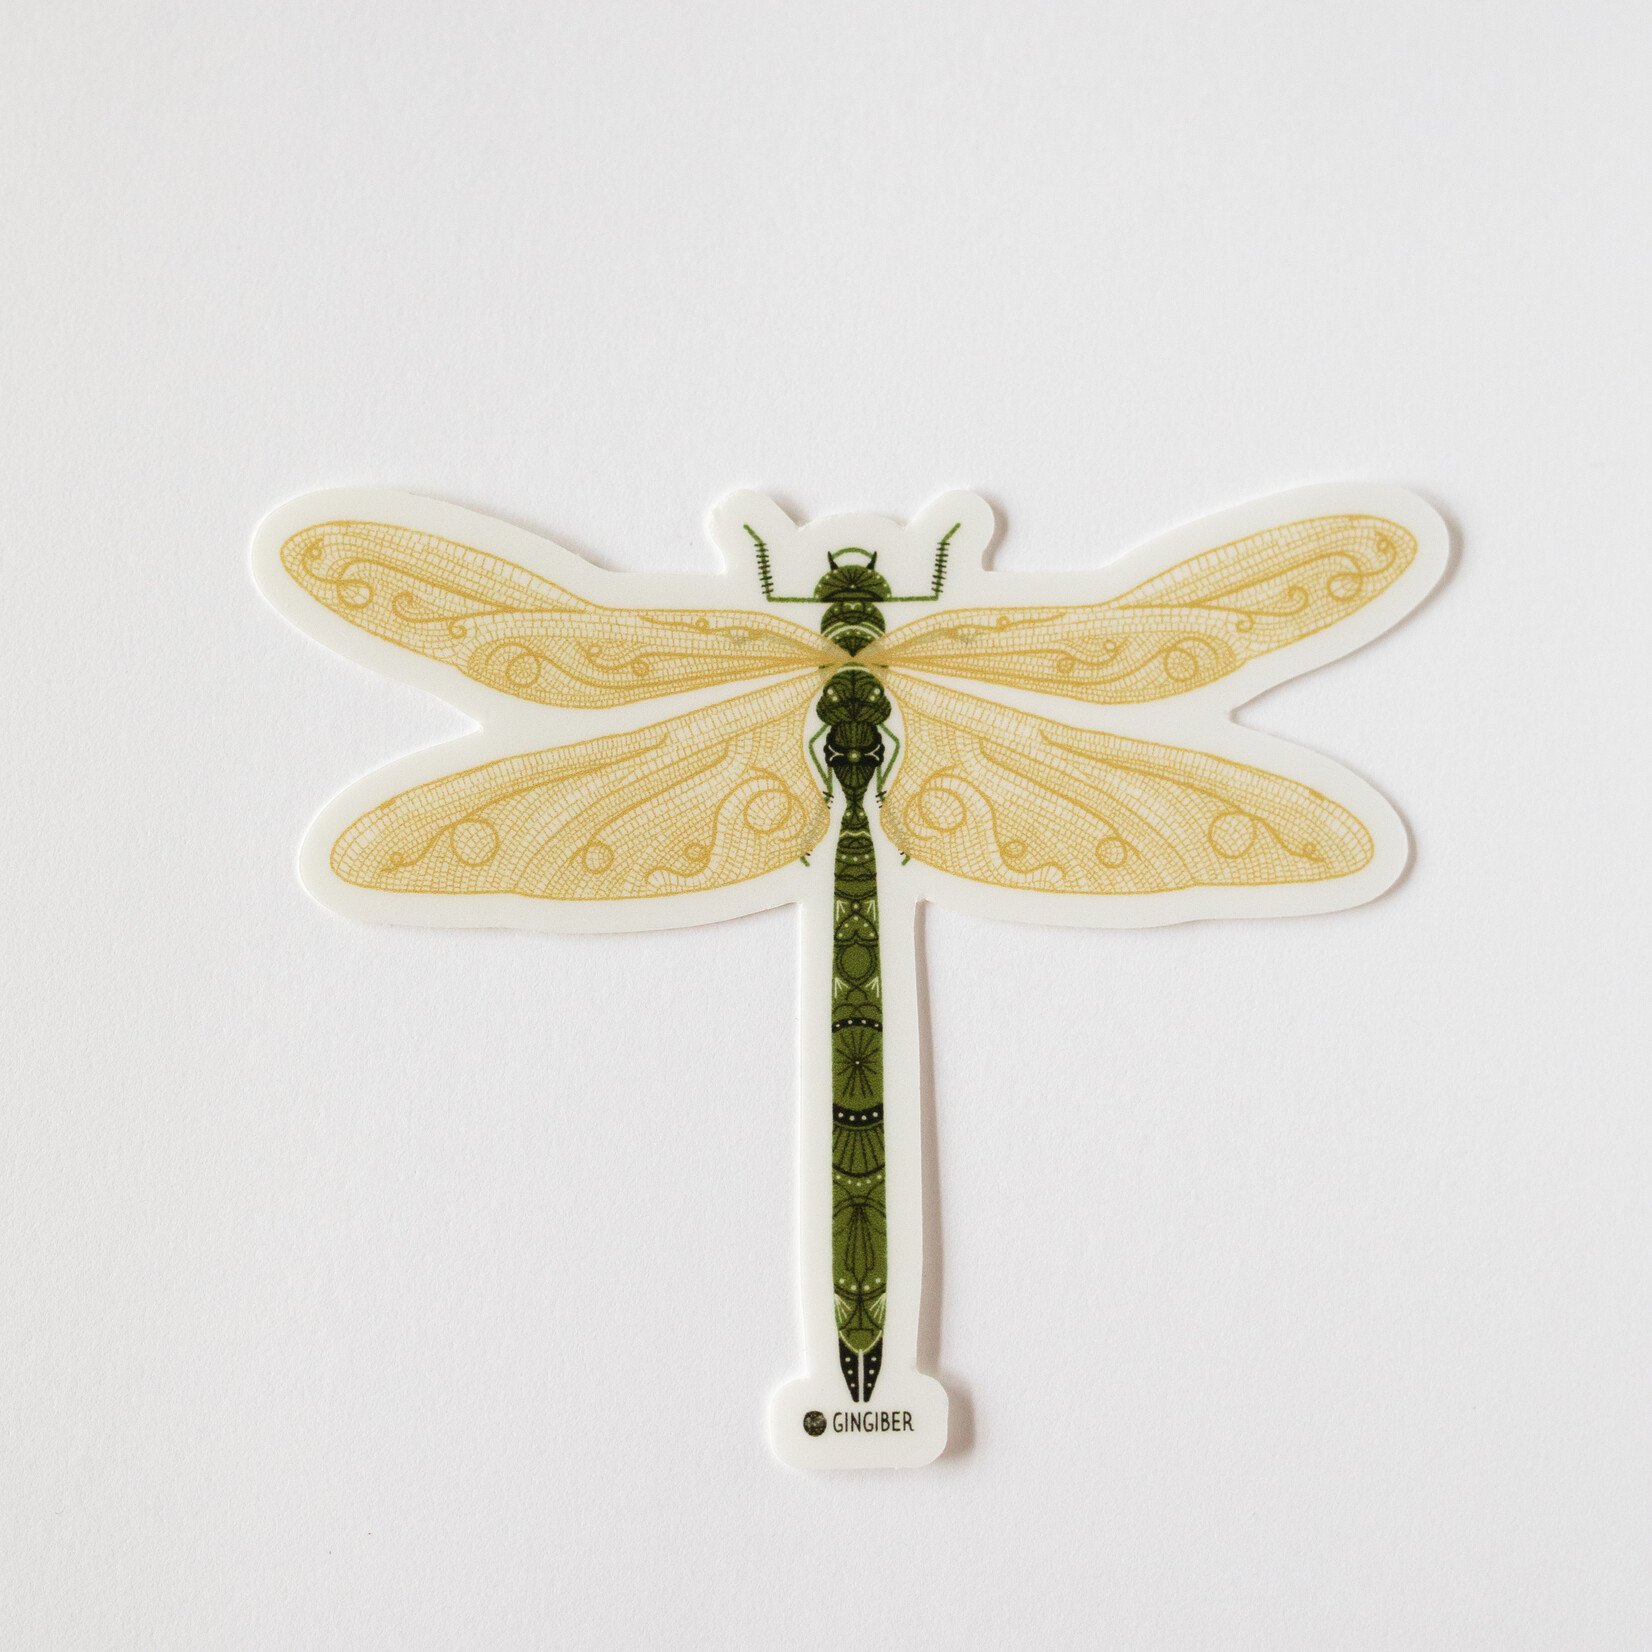 Dragonfly Sticker